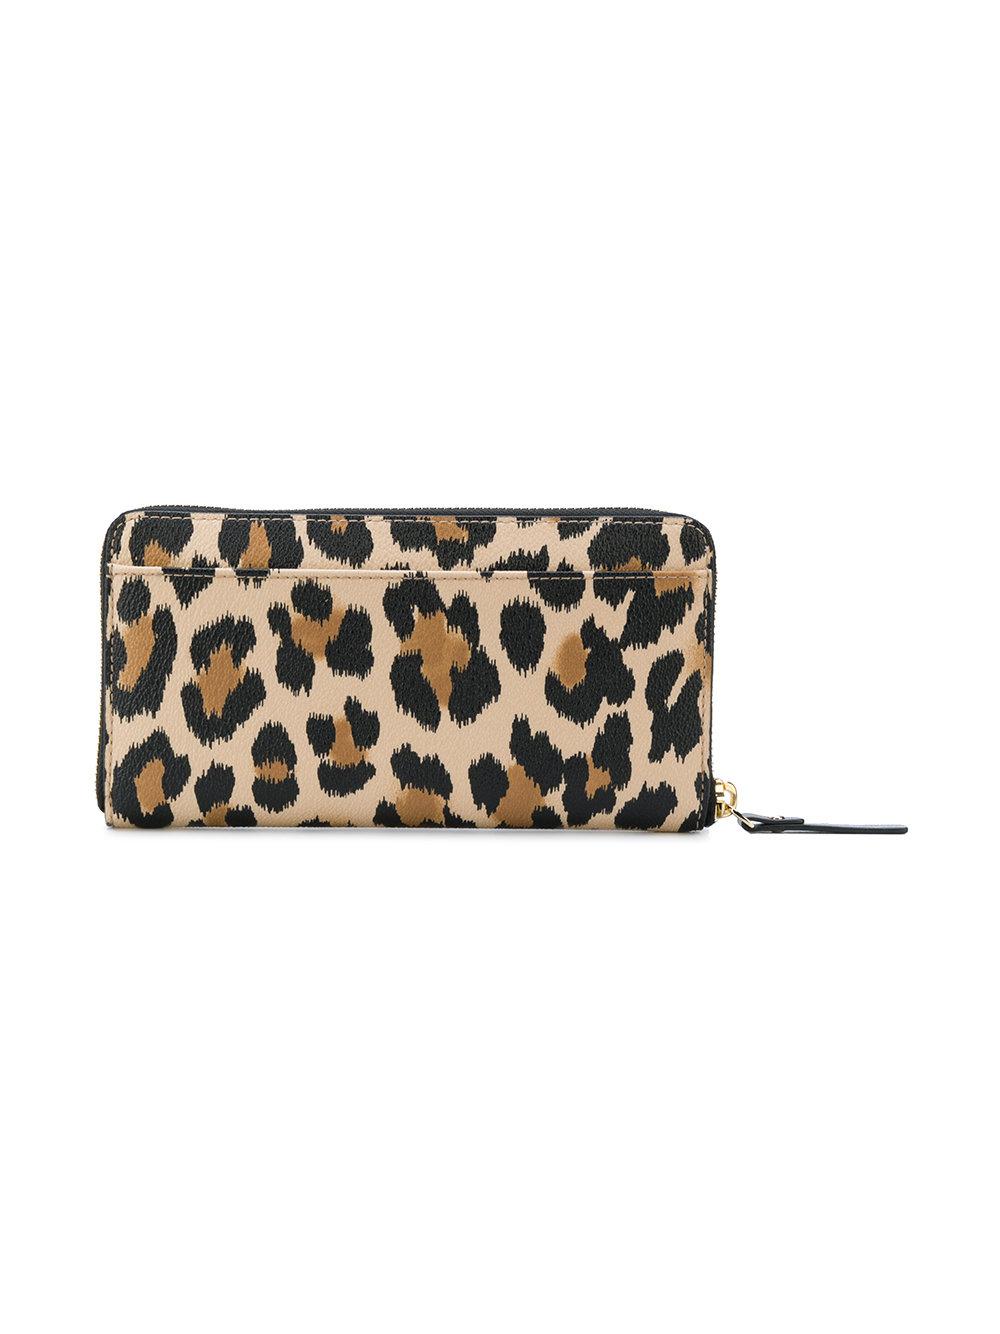 Kate Spade Leather Leopard Print Wallet in Brown - Lyst